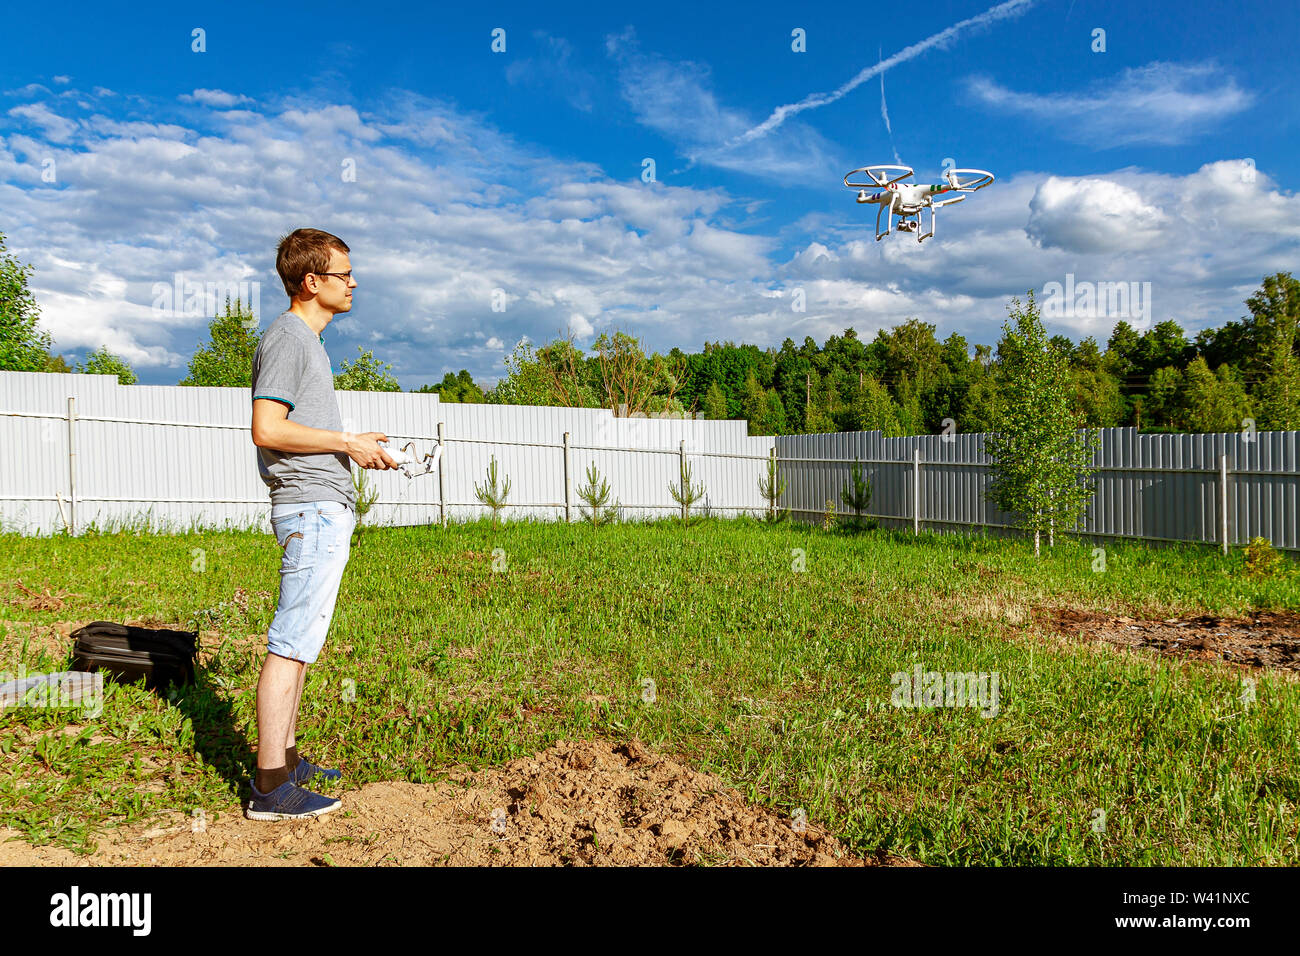 Maloyaroslavets Russia 06.02.2019 A man controls a quadcopter in nature. Stock Photo